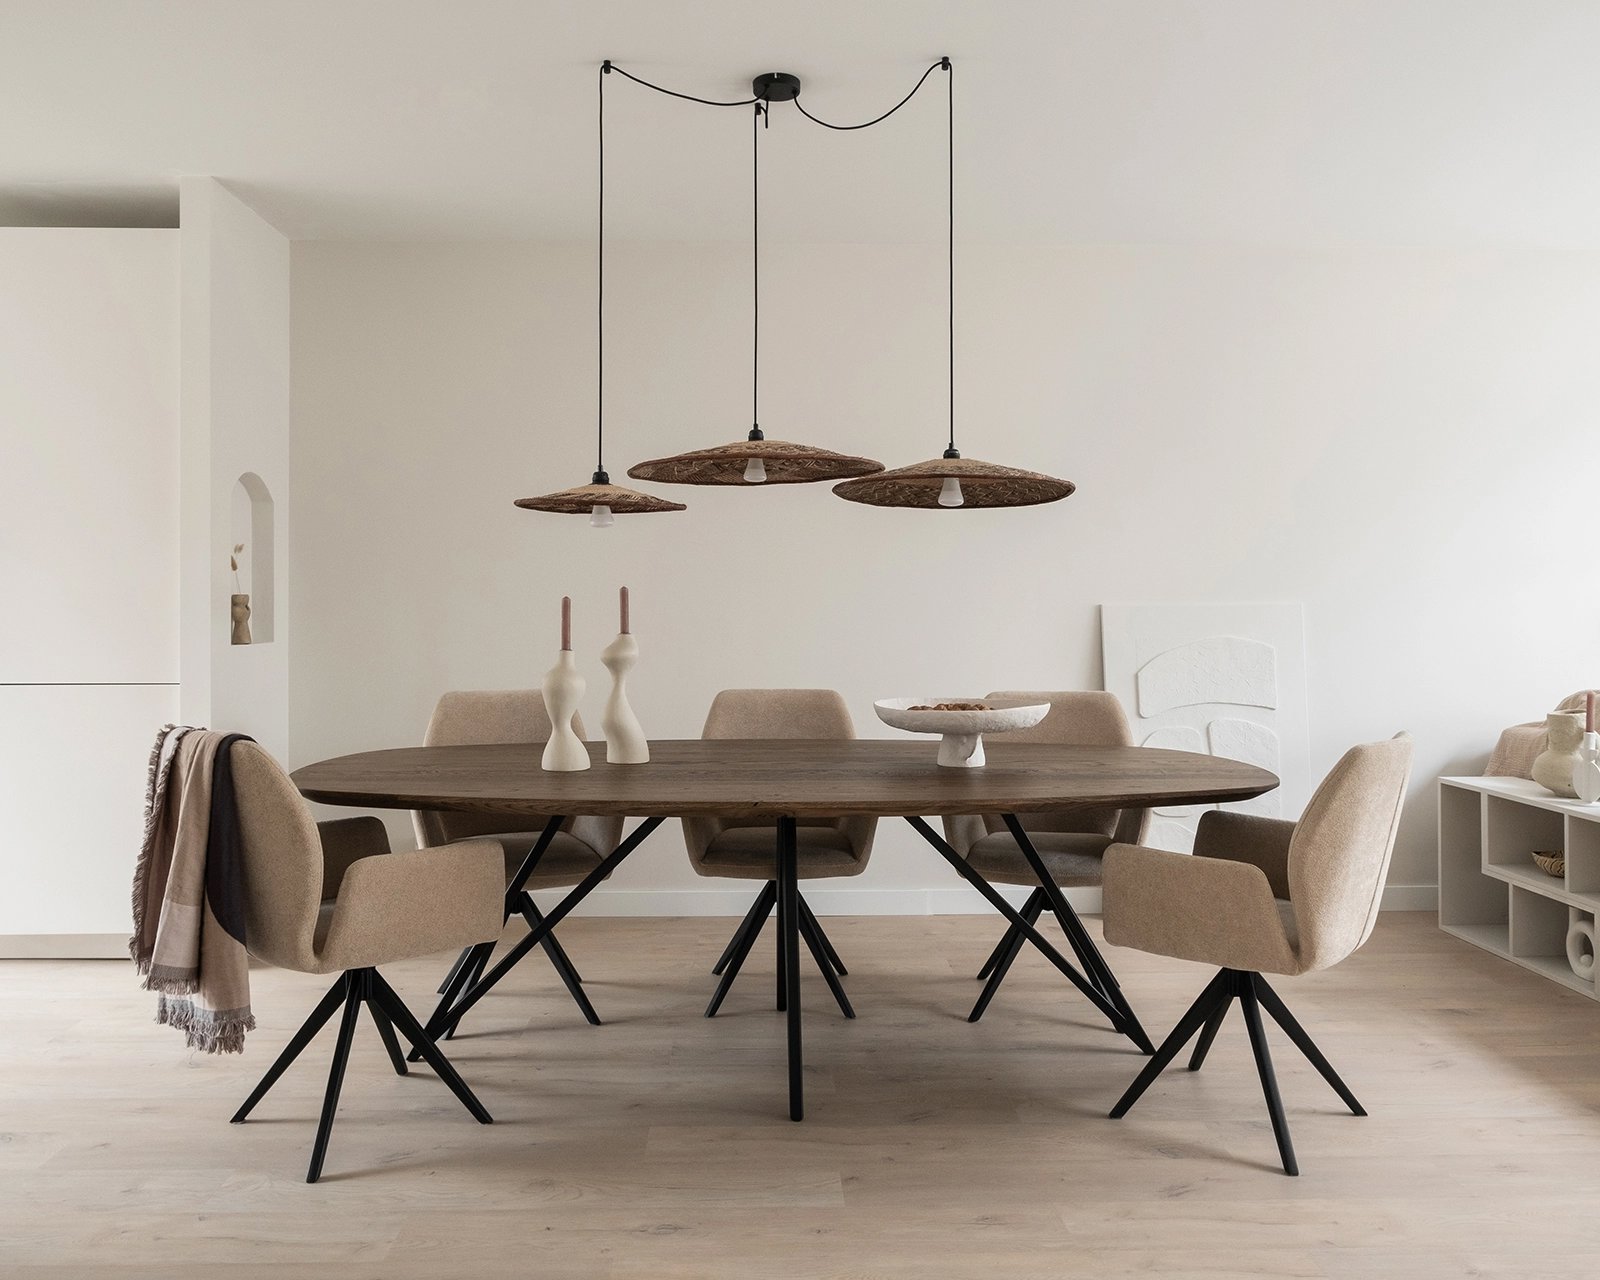 
Ovale eettafel eikenhout met onderstel Pomm in sfeervolle woonkamer | Table du Sud